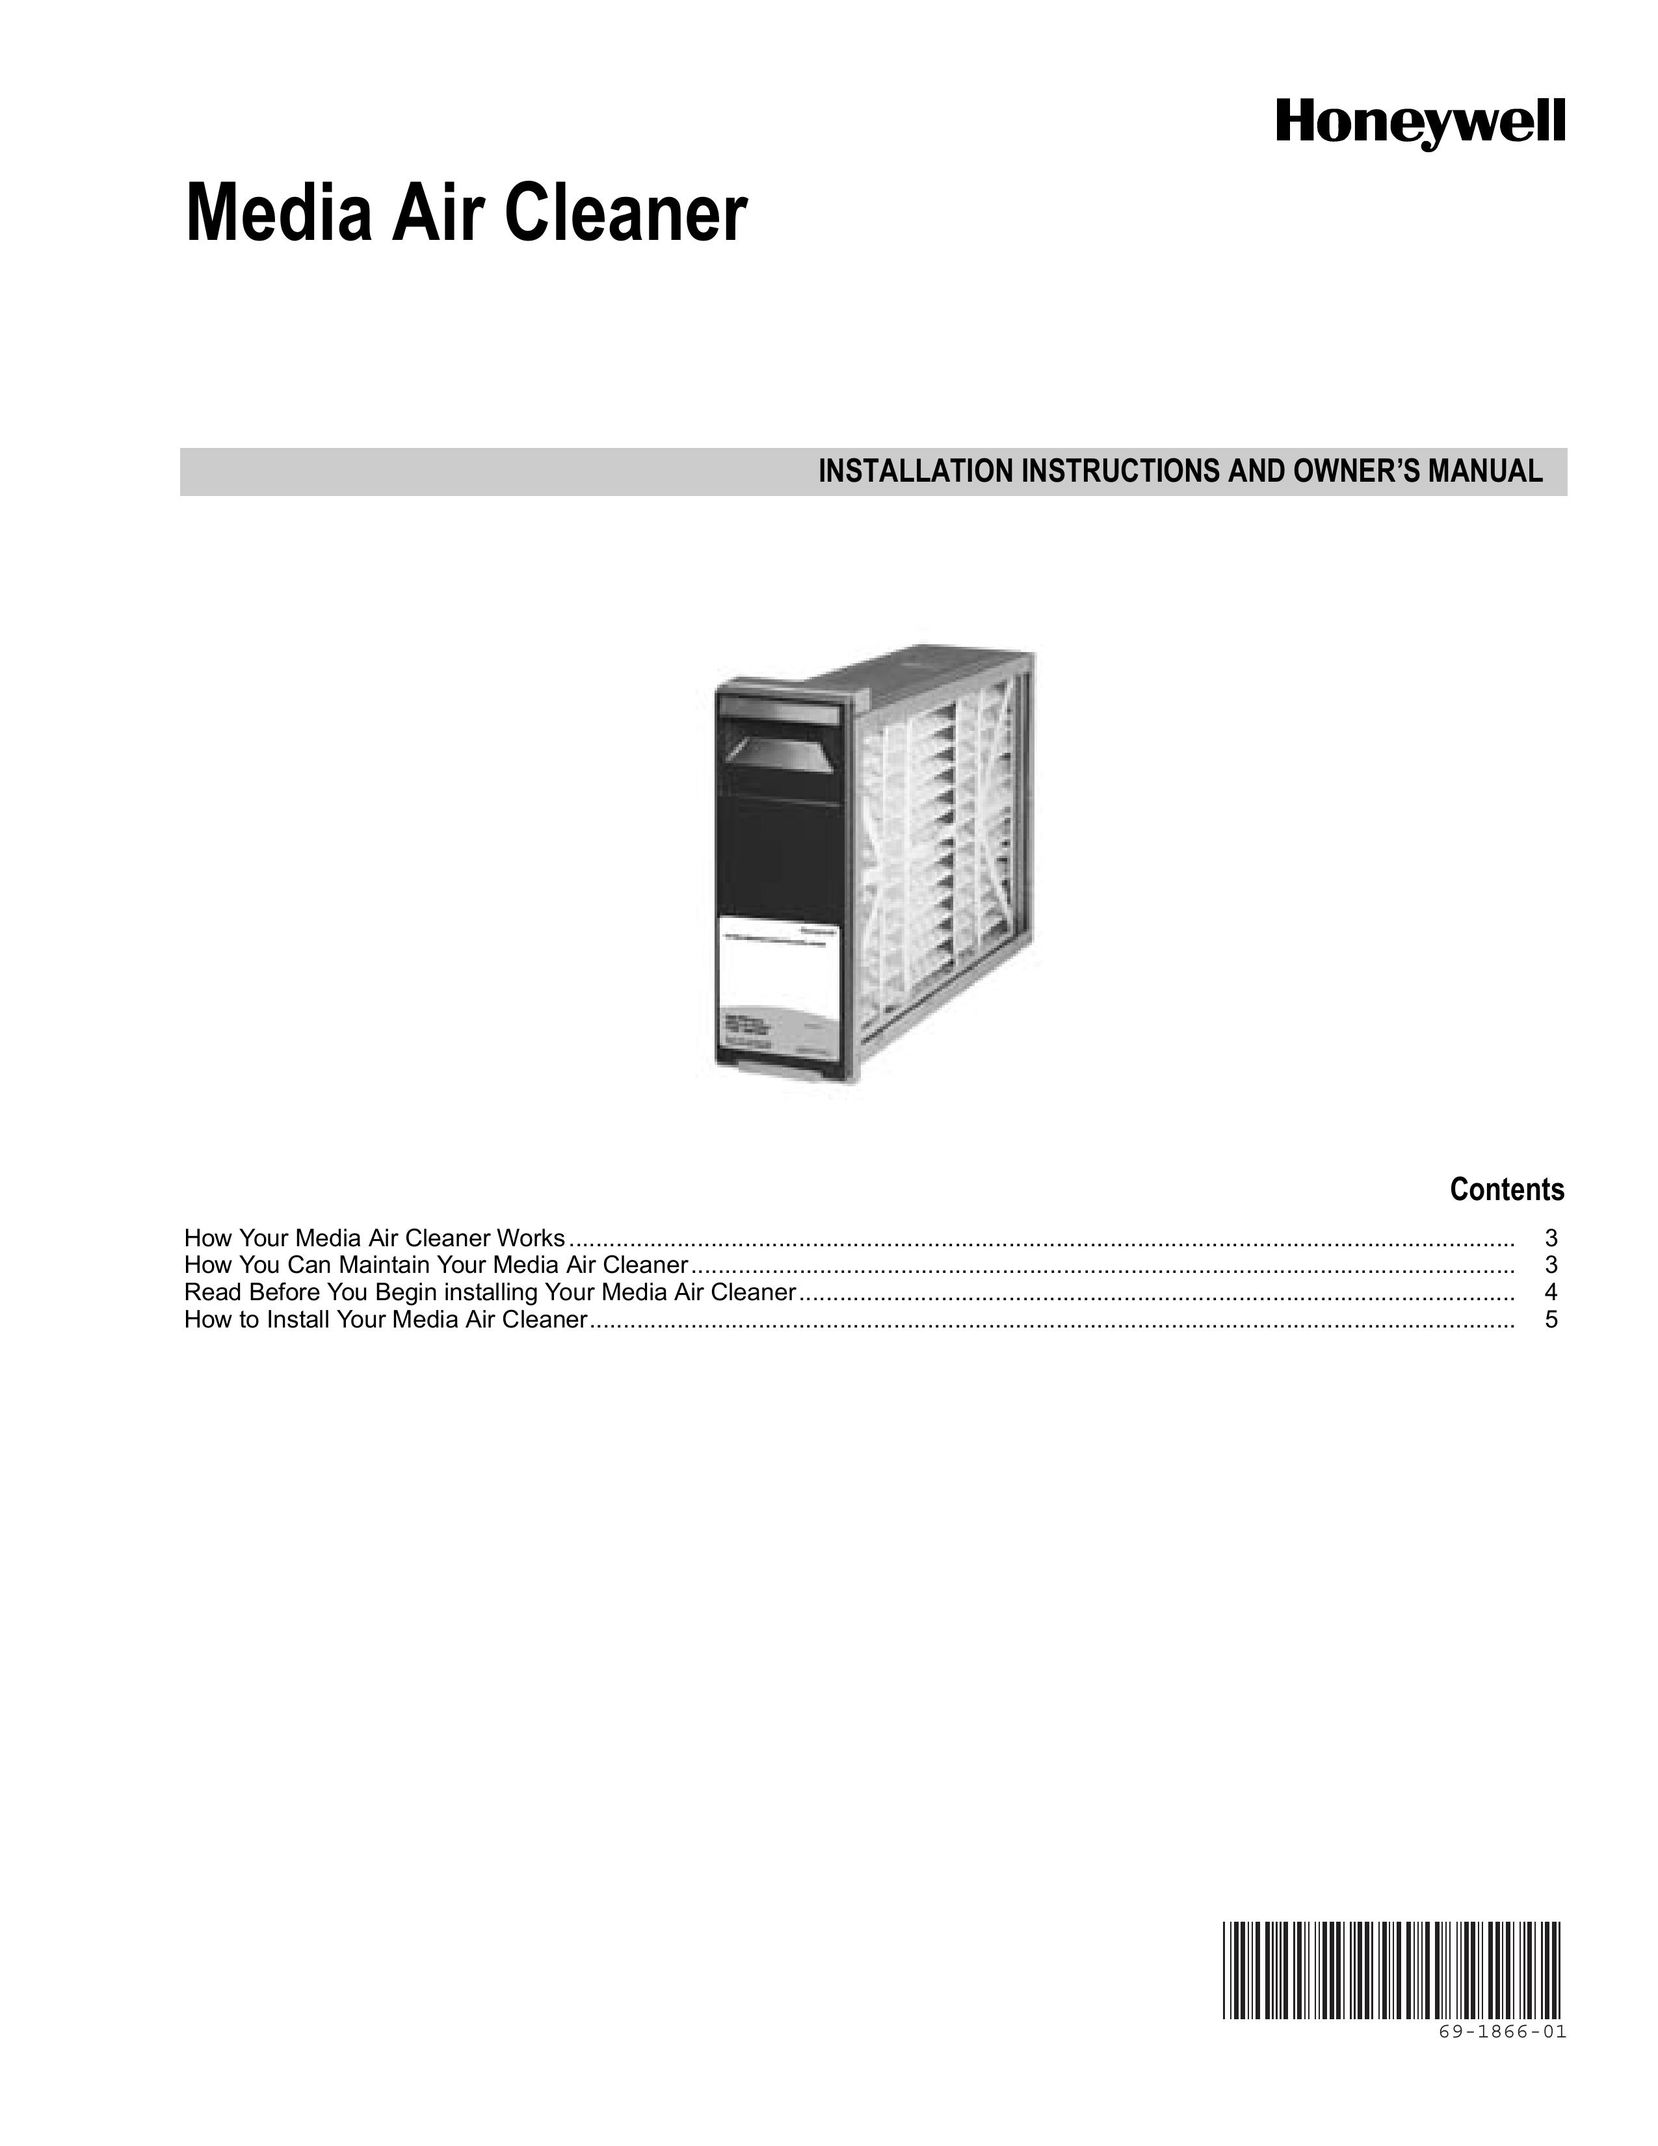 Honeywell 69-1866-01 Air Cleaner User Manual